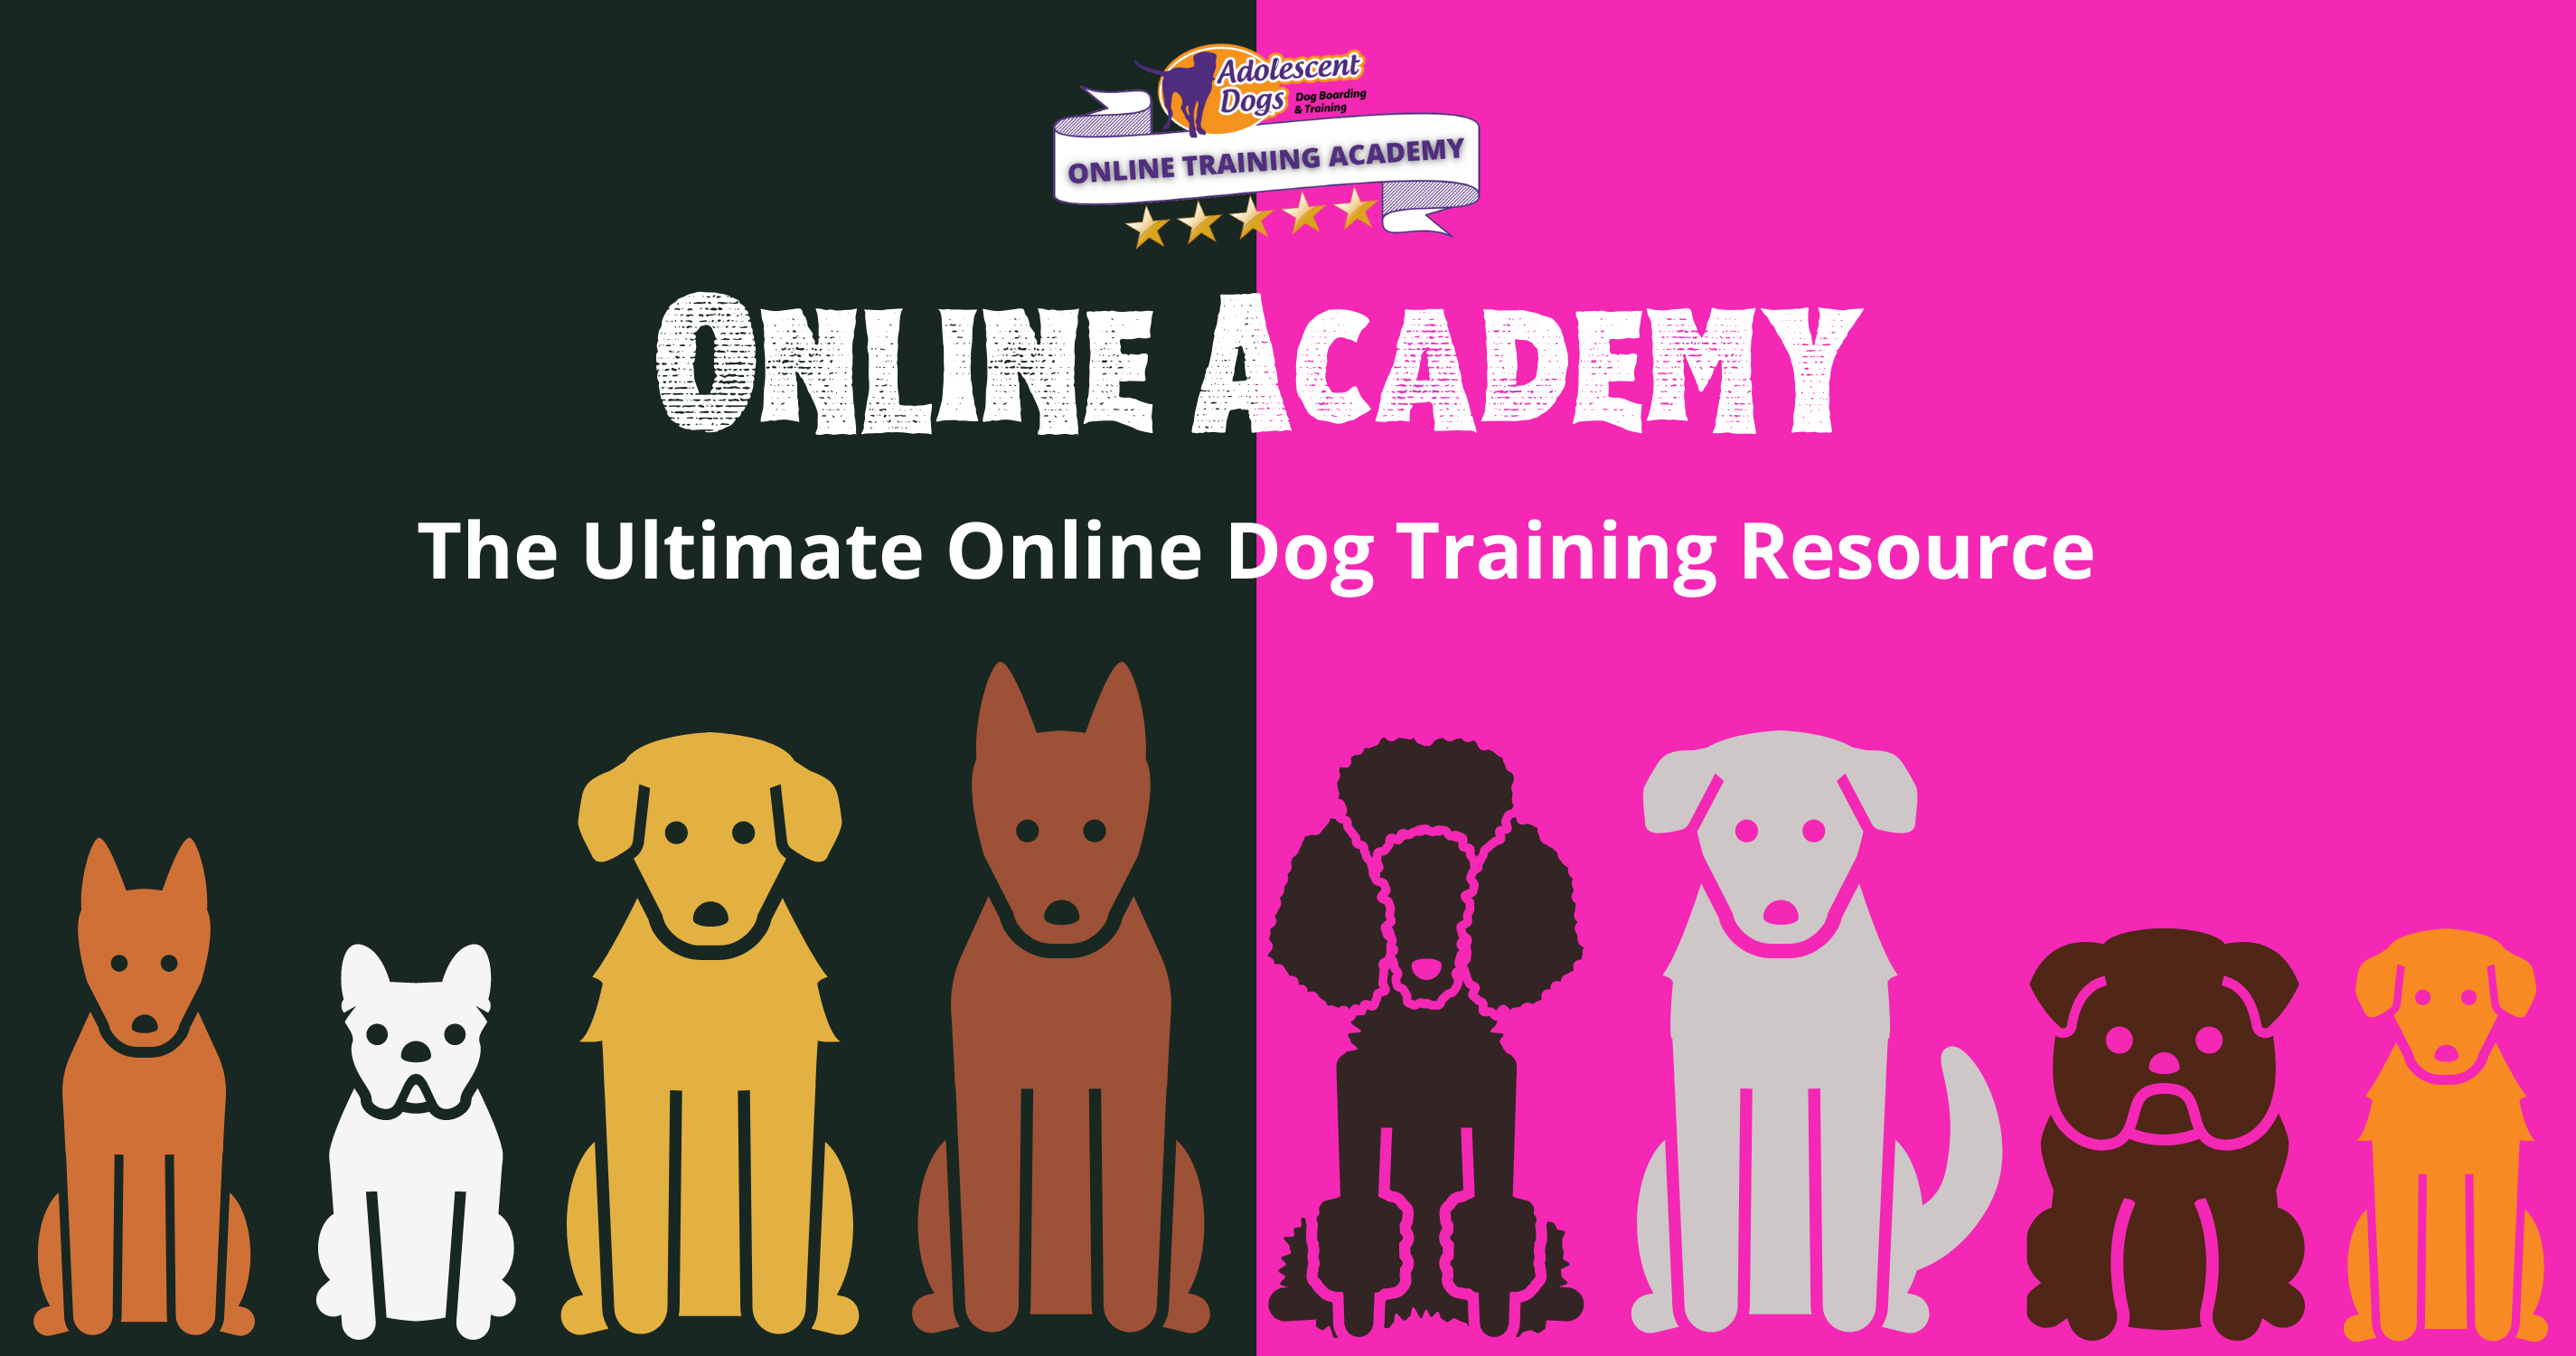 Adolescent Dogs Training Academy